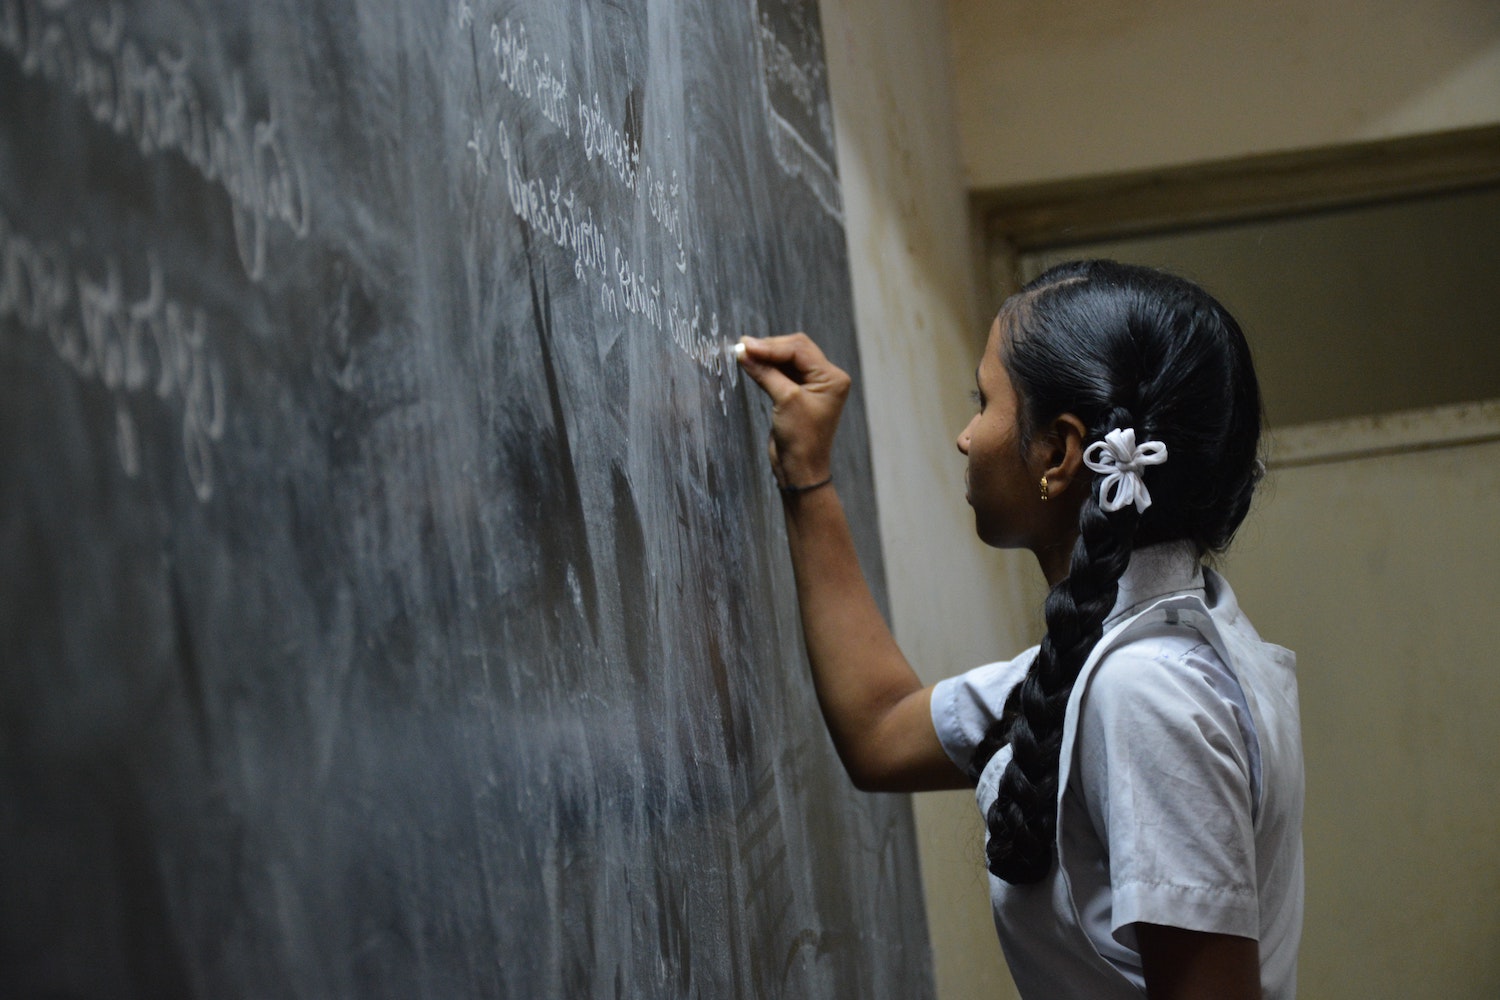 Indian girl writing on blackboard with chalk